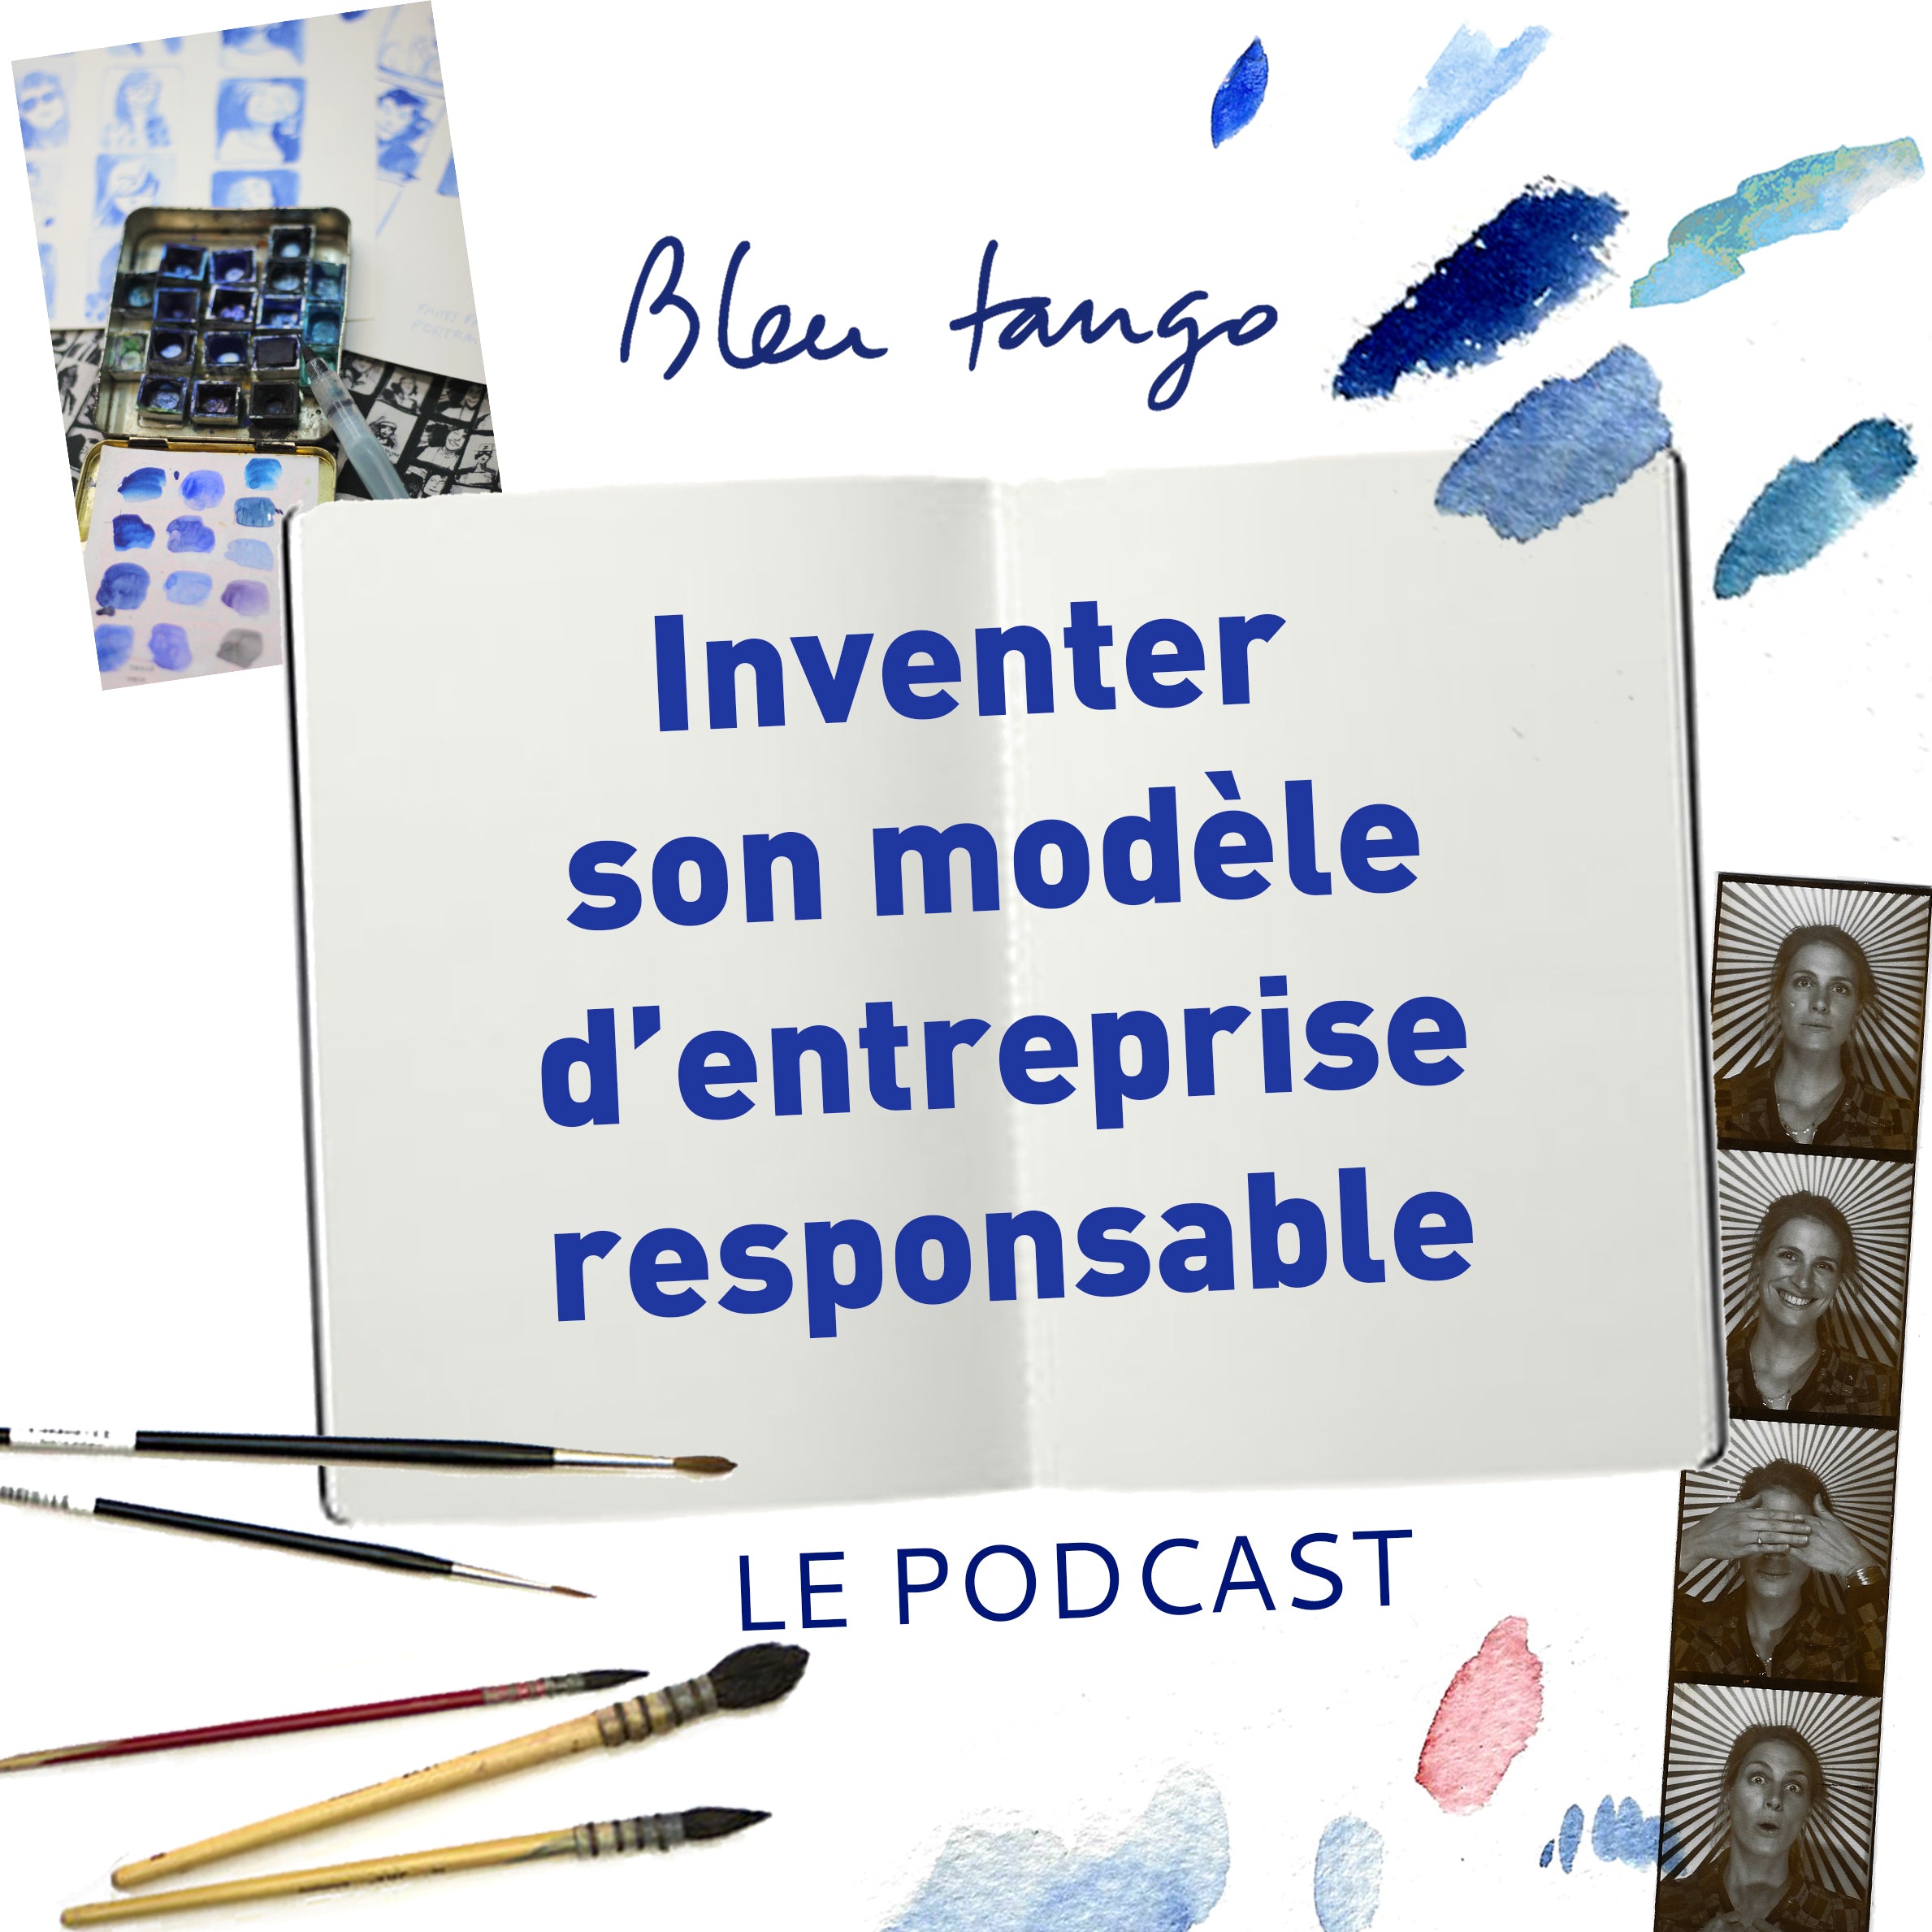 Le podcast de Bleu tango